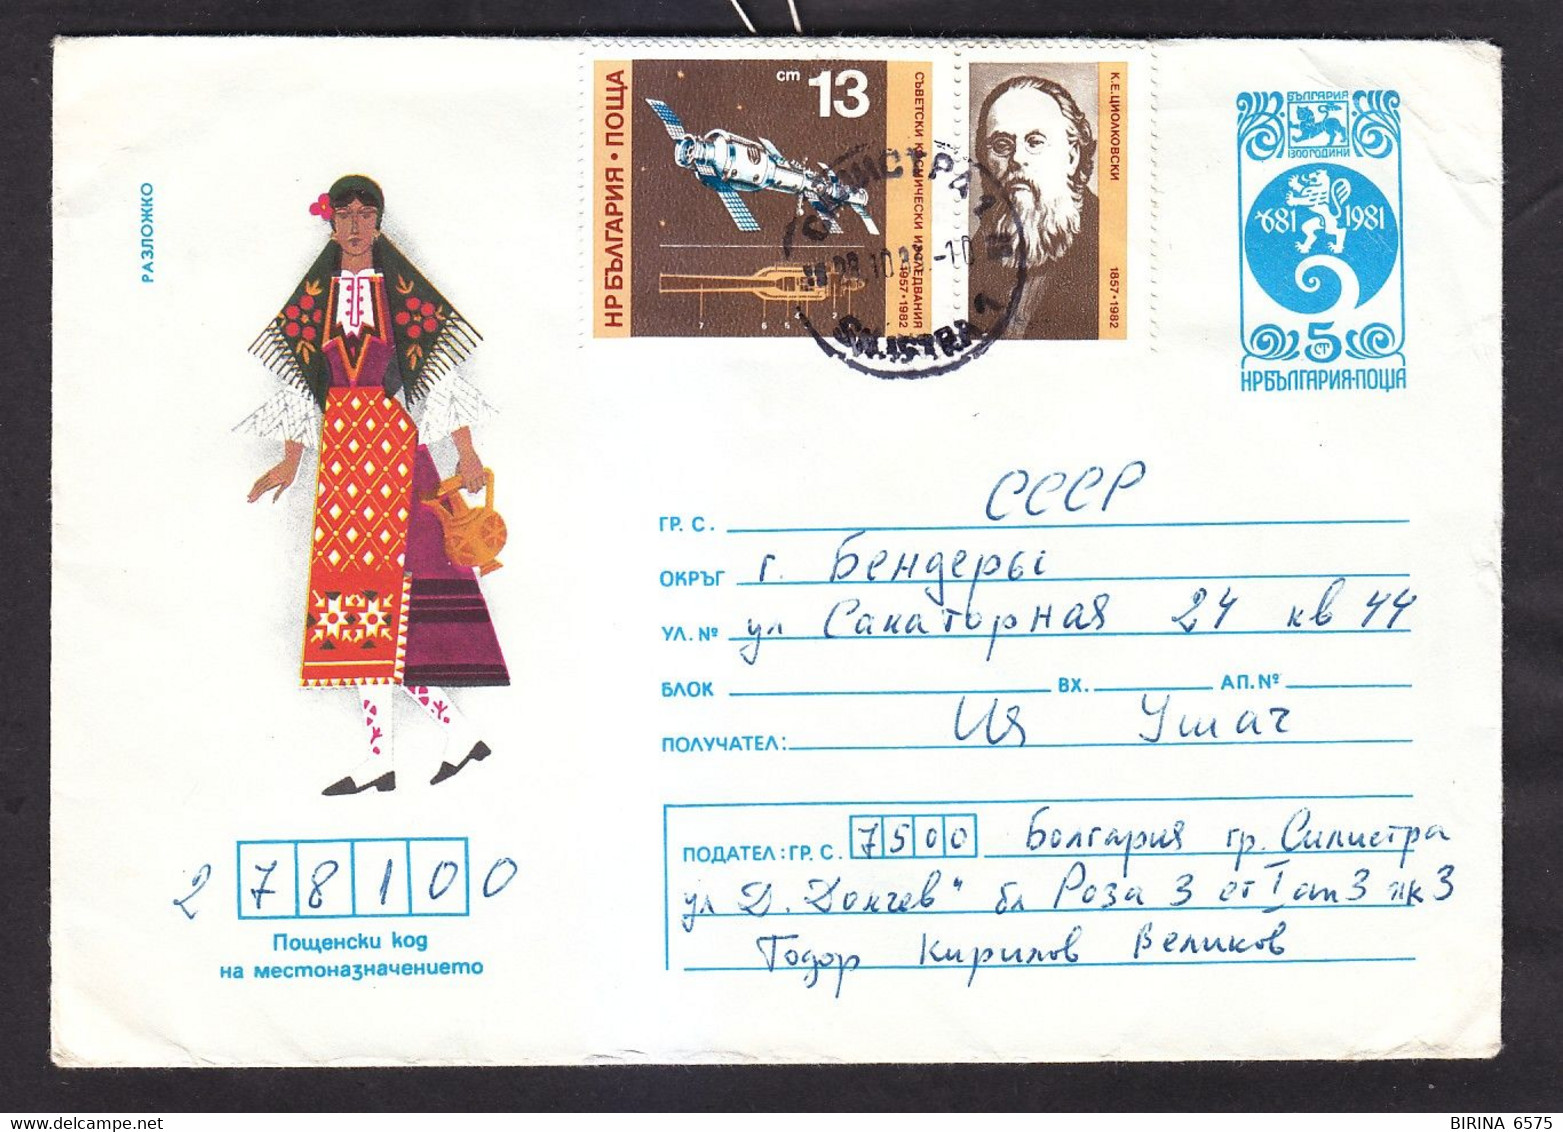 ENVELOPE. BULGARIA. 1983. - 8-1-i - Covers & Documents